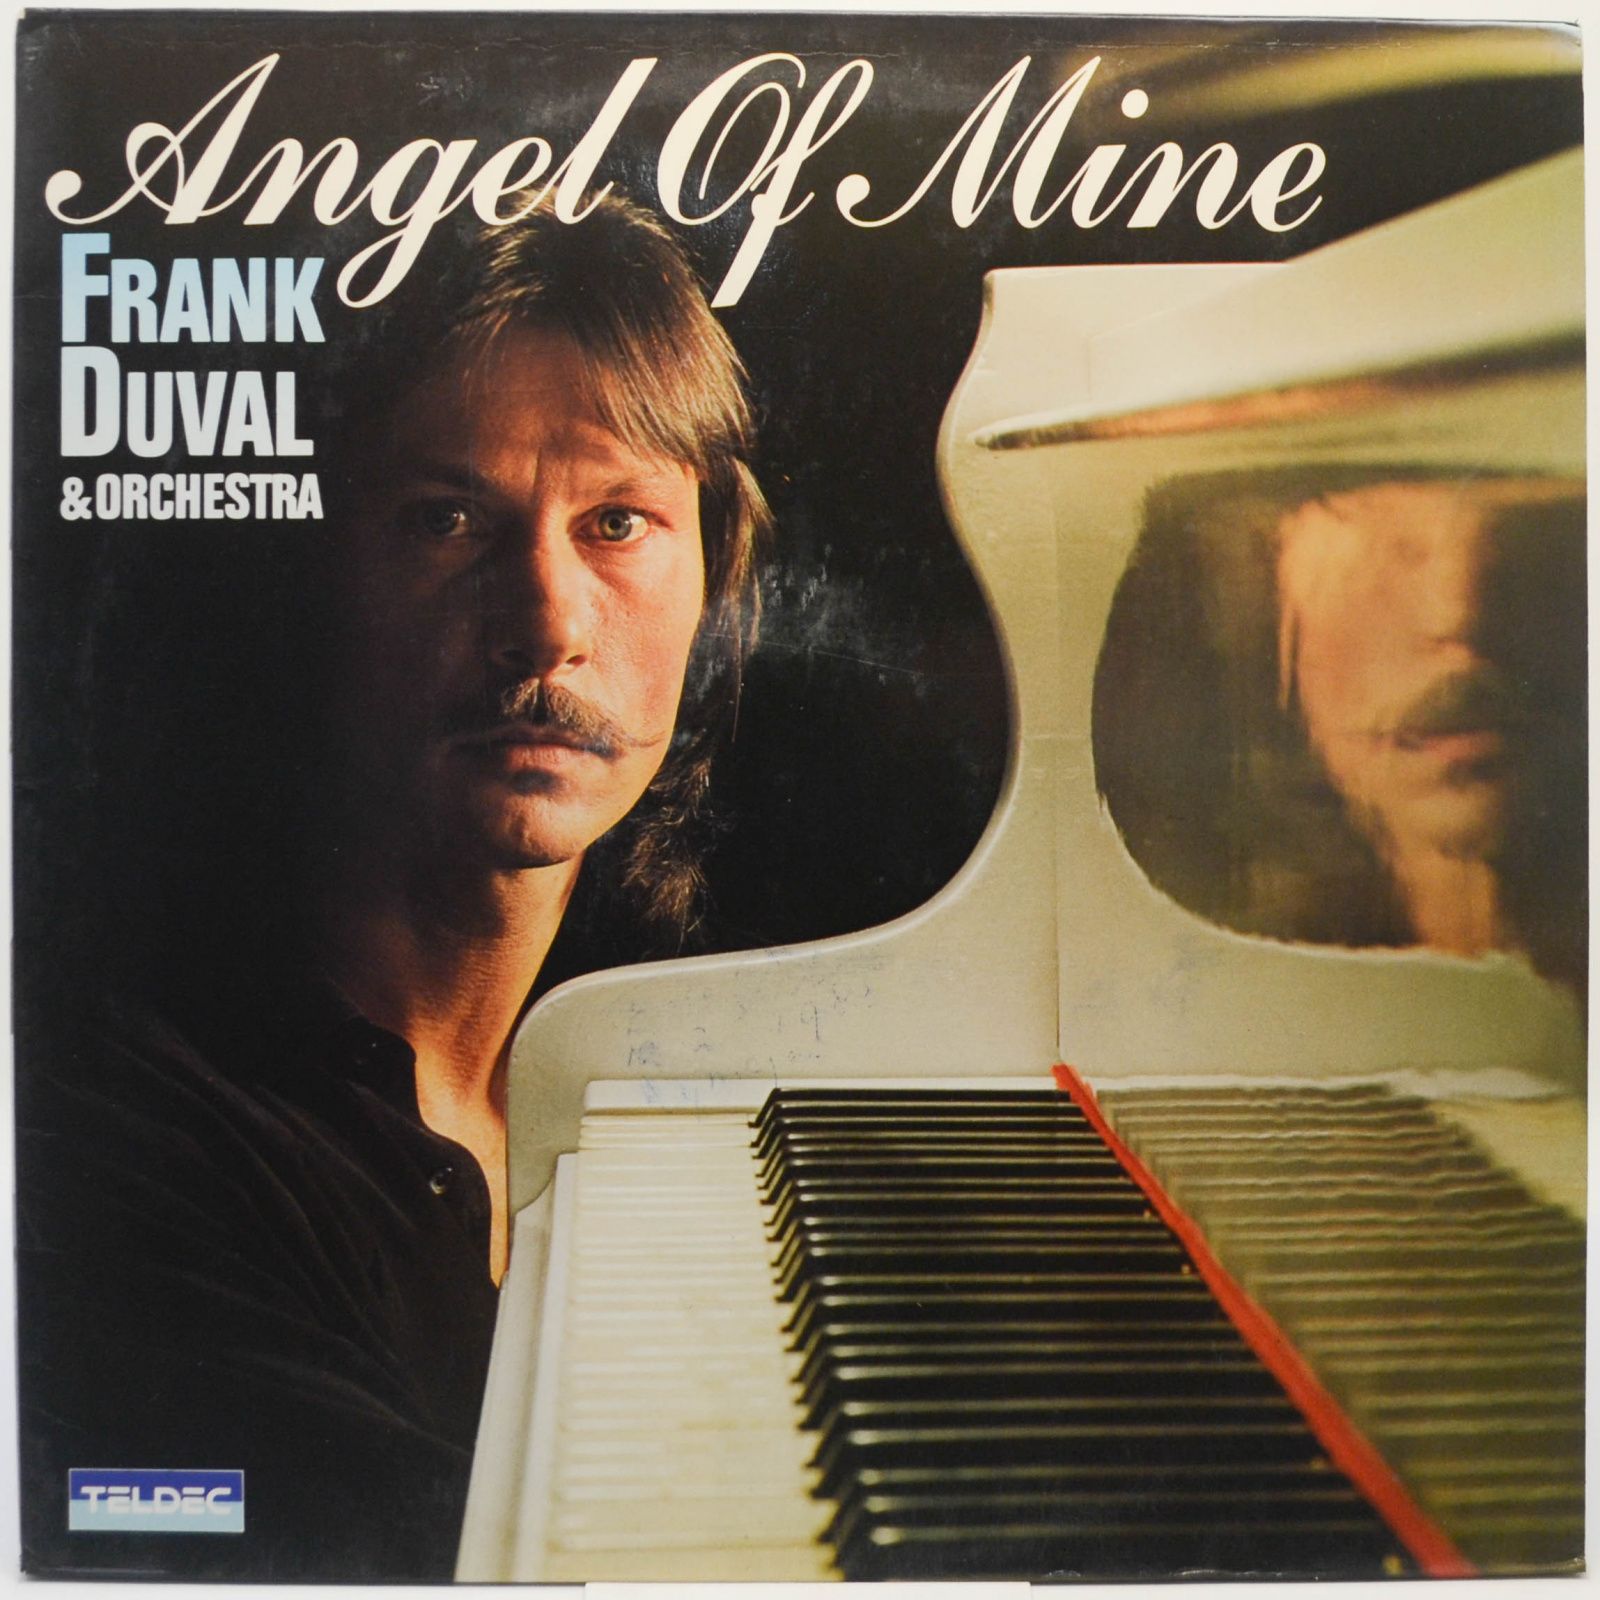 Angel Of Mine, 1981